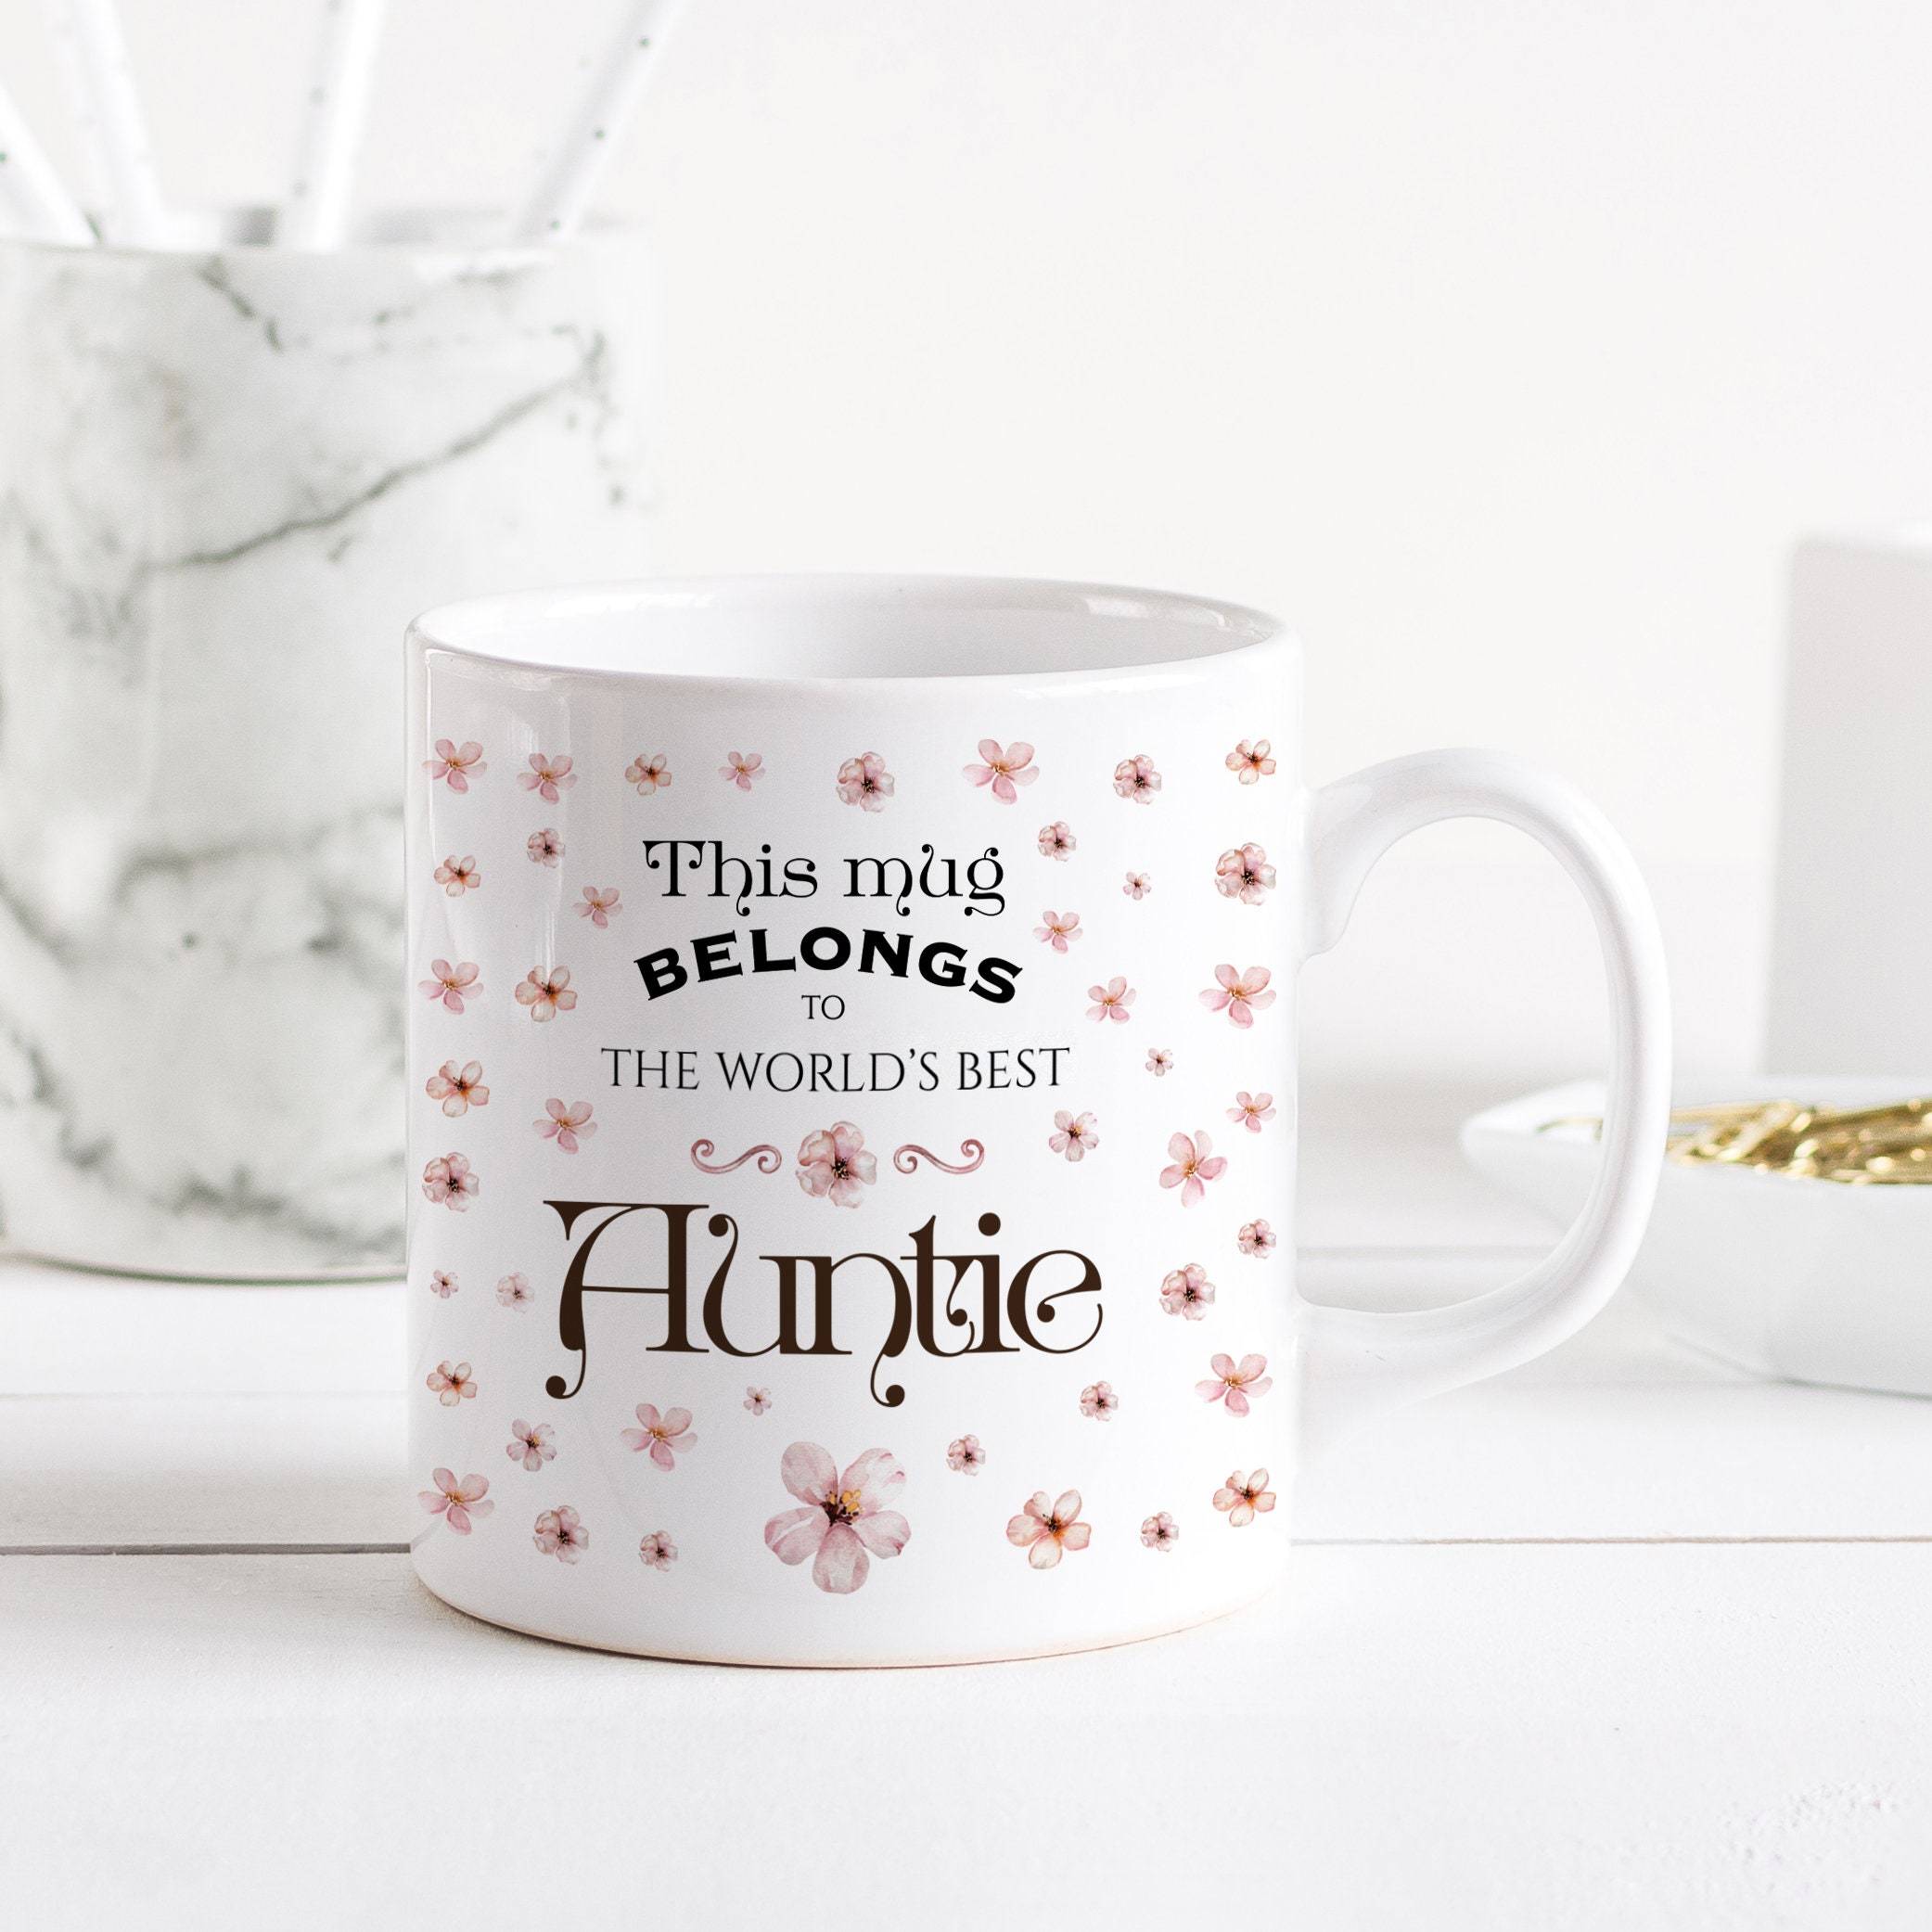 This Mug Belongs To The World's Best Nanny Mug, Christmas gift for Grandma, Gran, Granny, Mother's Day Present Idea, Flower Floral Design